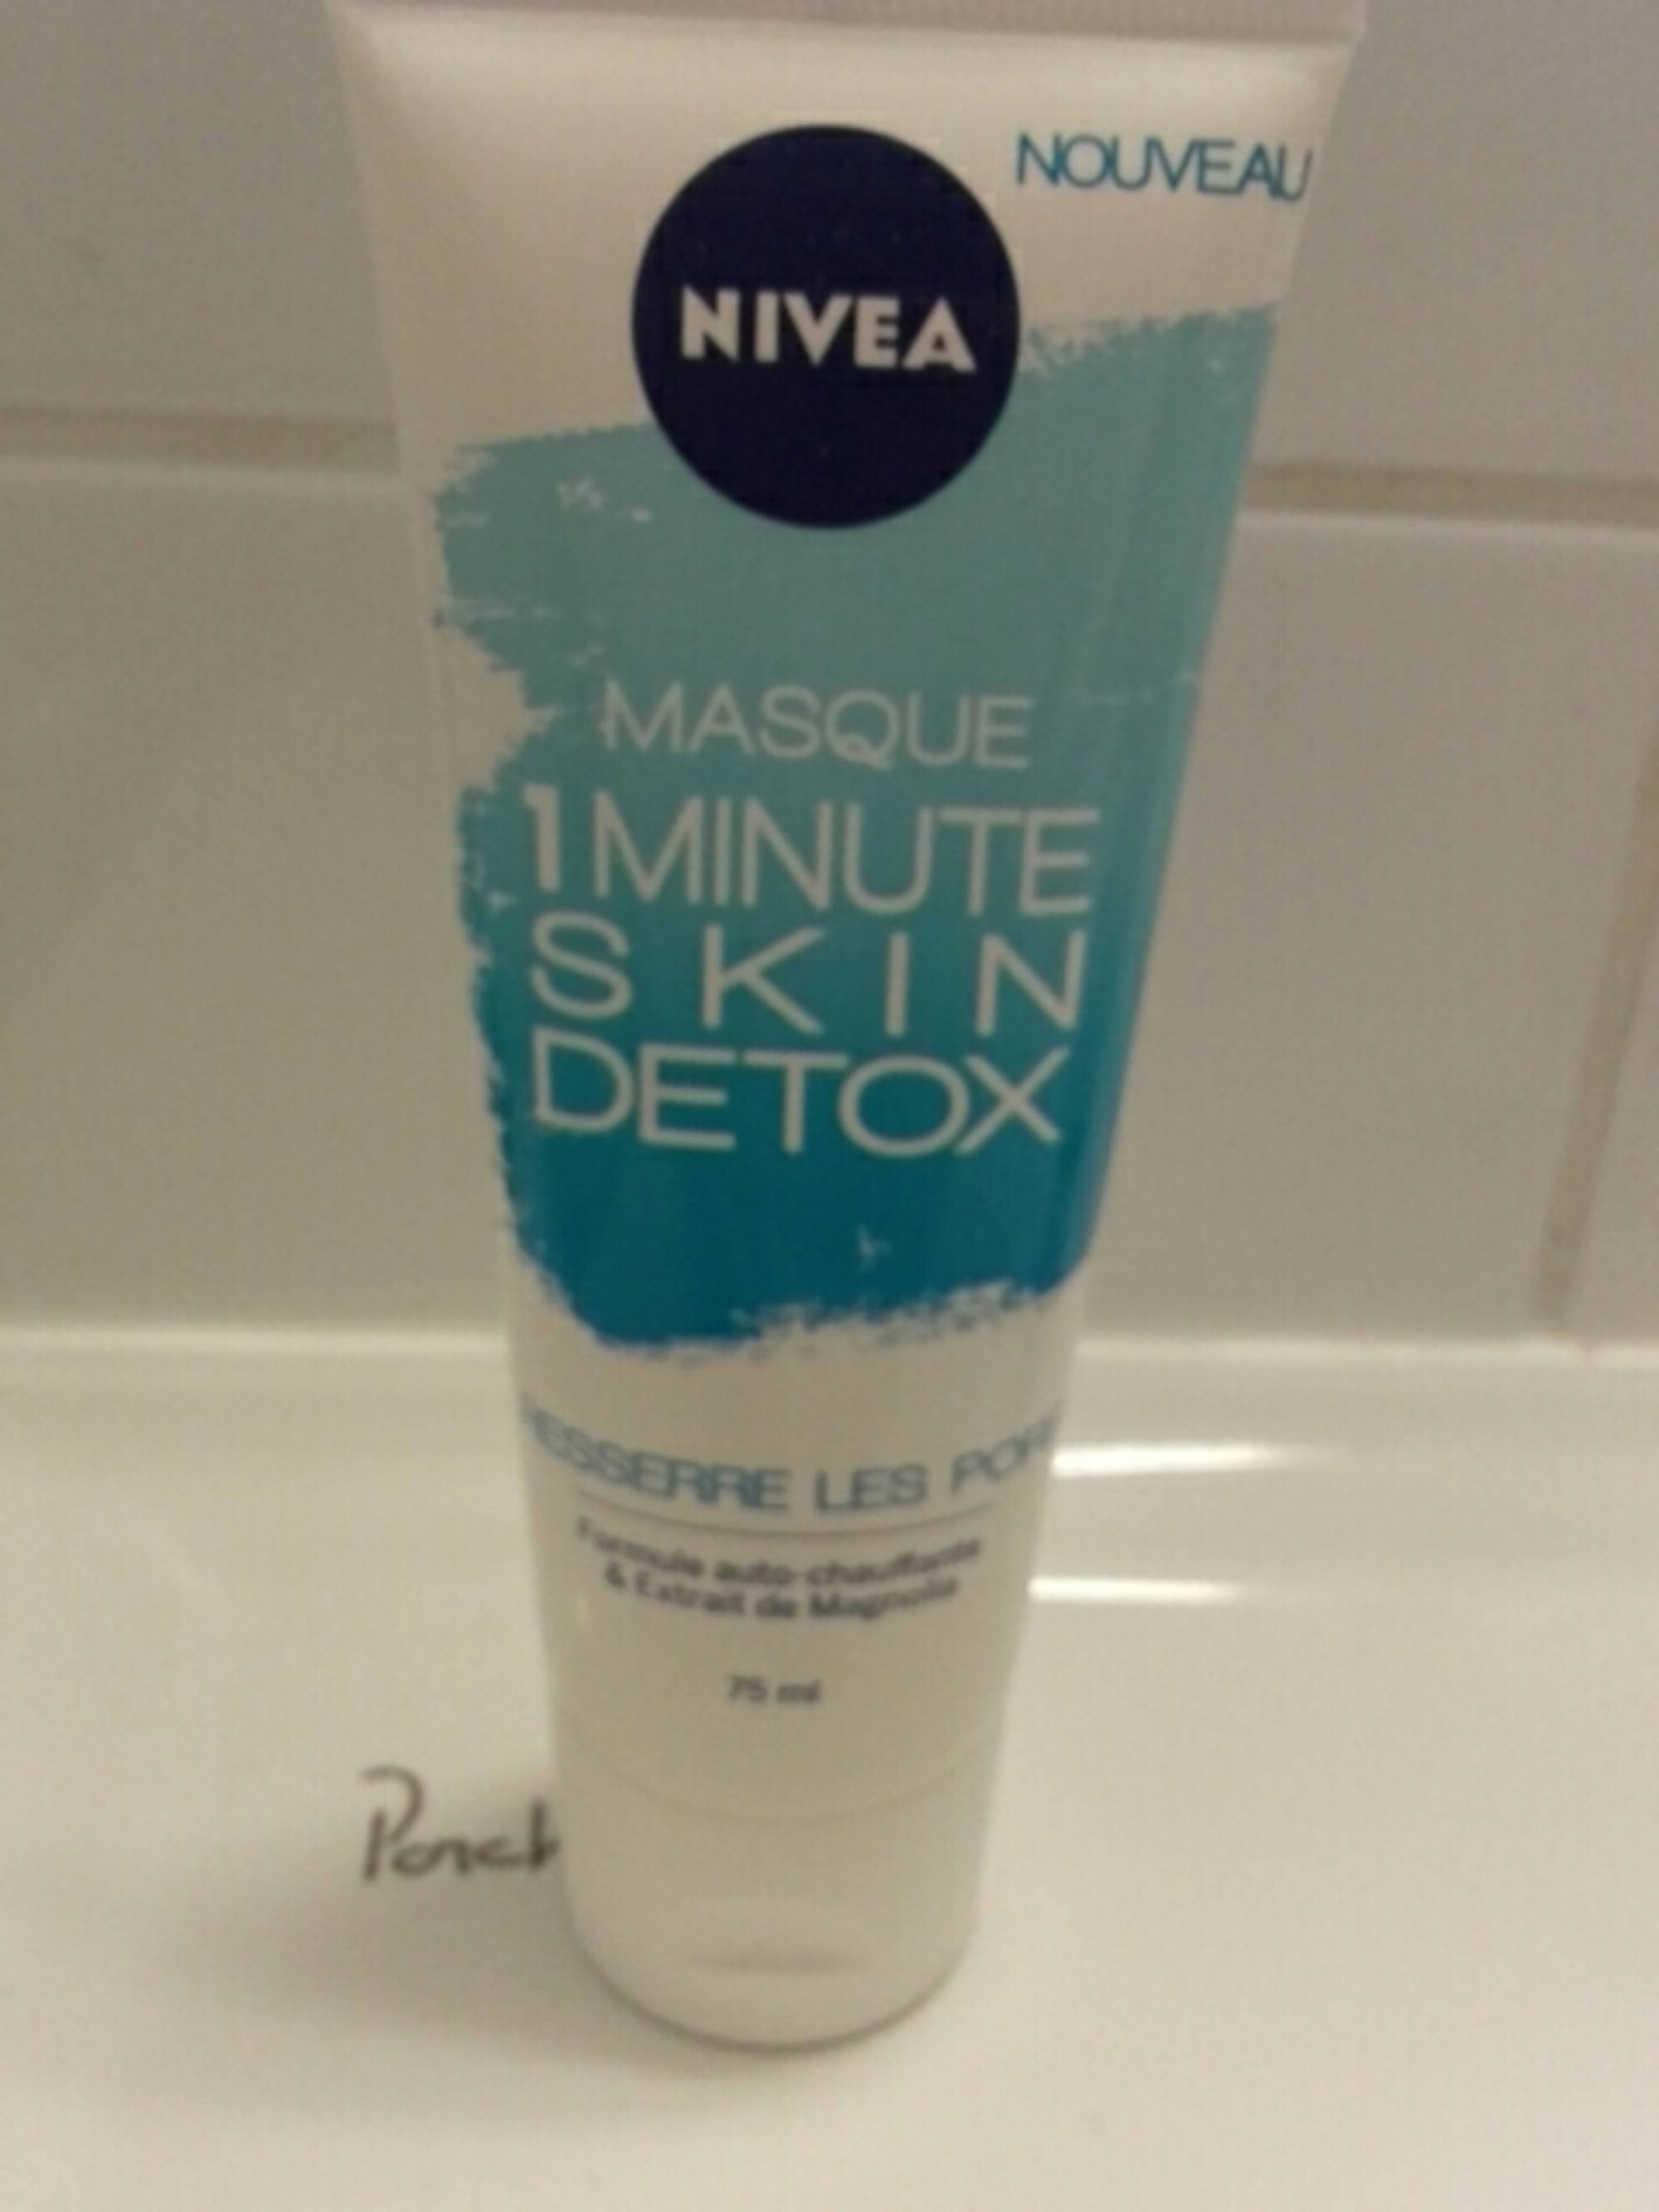 NIVEA - Masque 1 minute skin detox